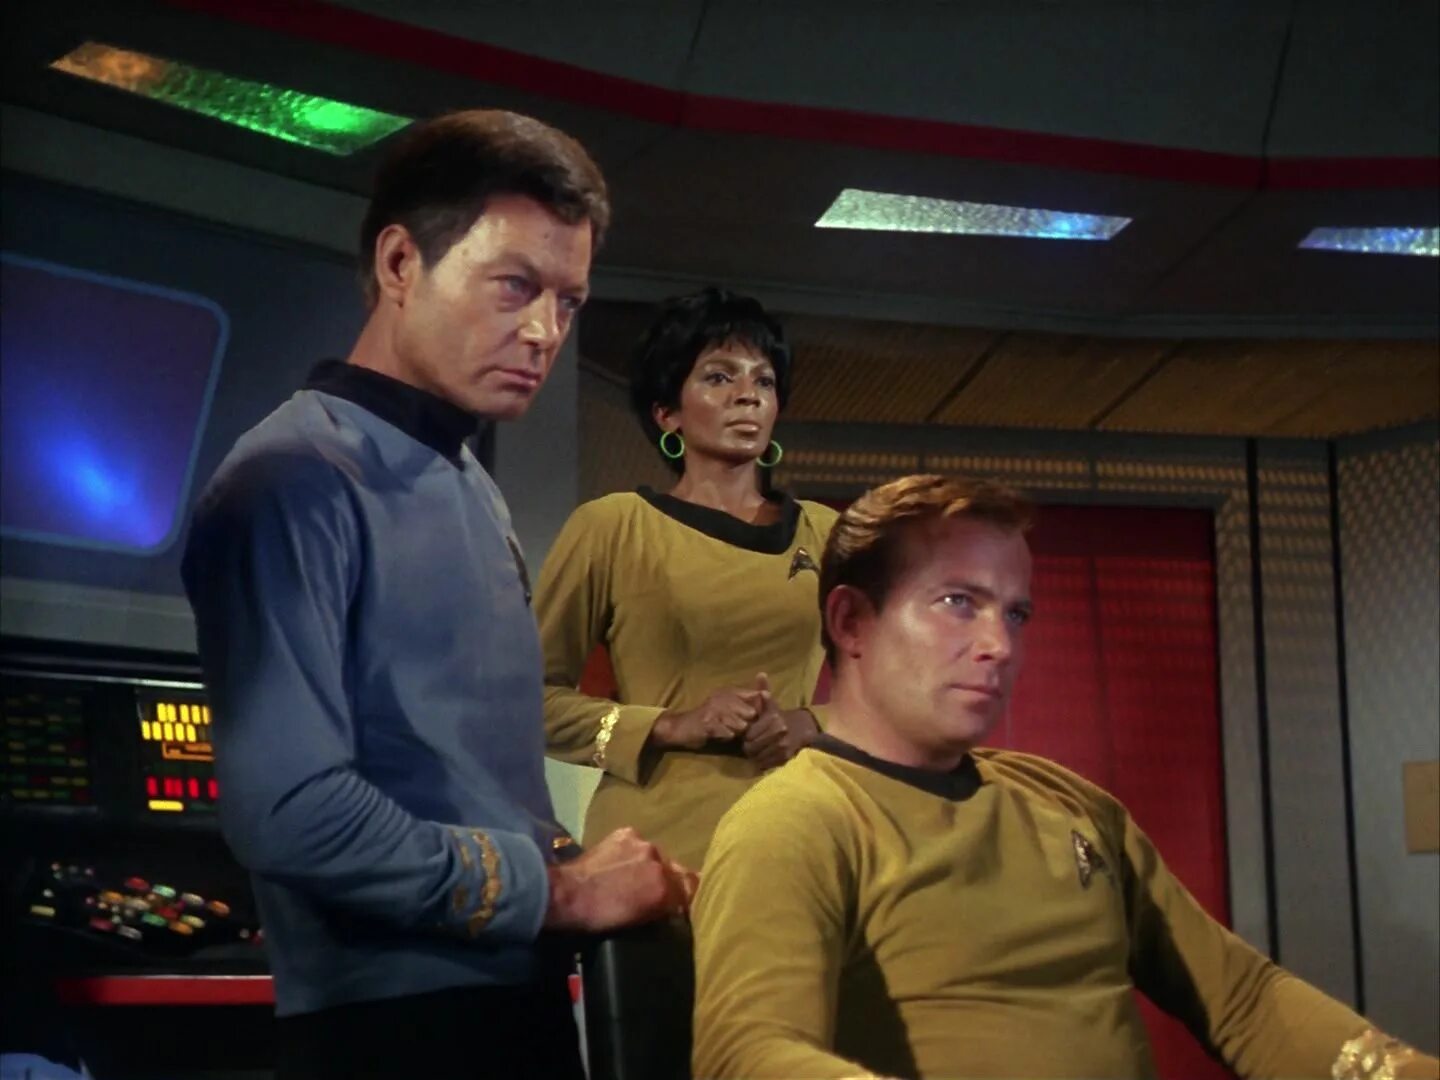 Star Trek Original Series. Star trek original